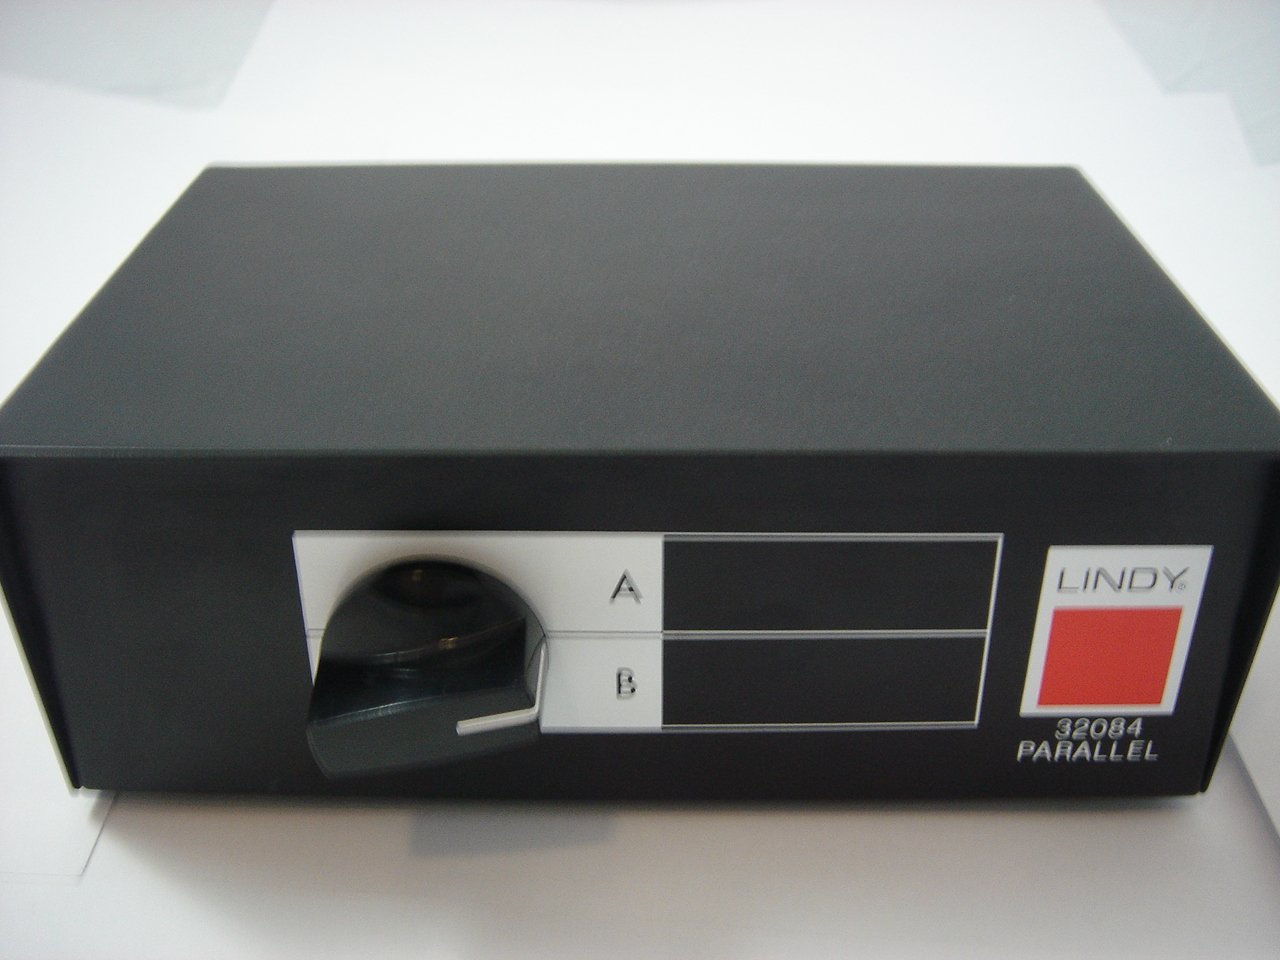 MC0975_32084_Lindy 2 to 1 parallel printer switch box - Image3